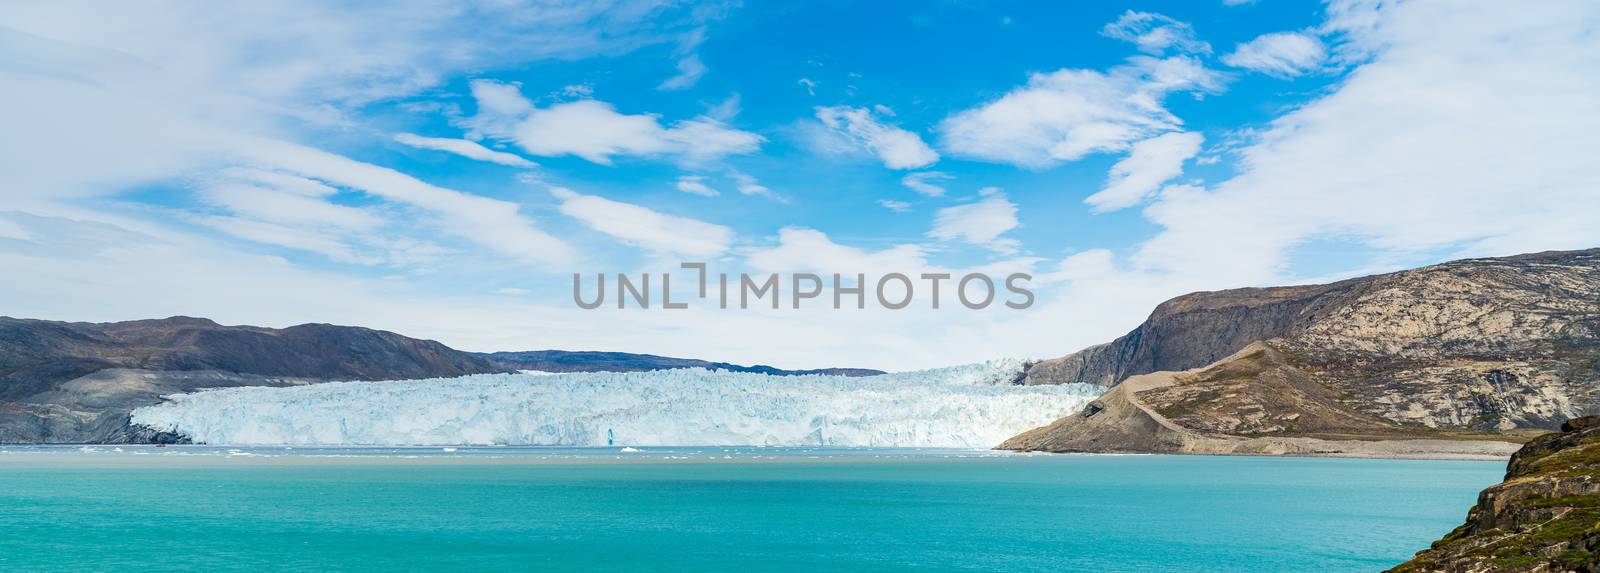 Glacier Eqi aka Ilulissat Glacier in Greenland - glacier front in West Greenland by Maridav